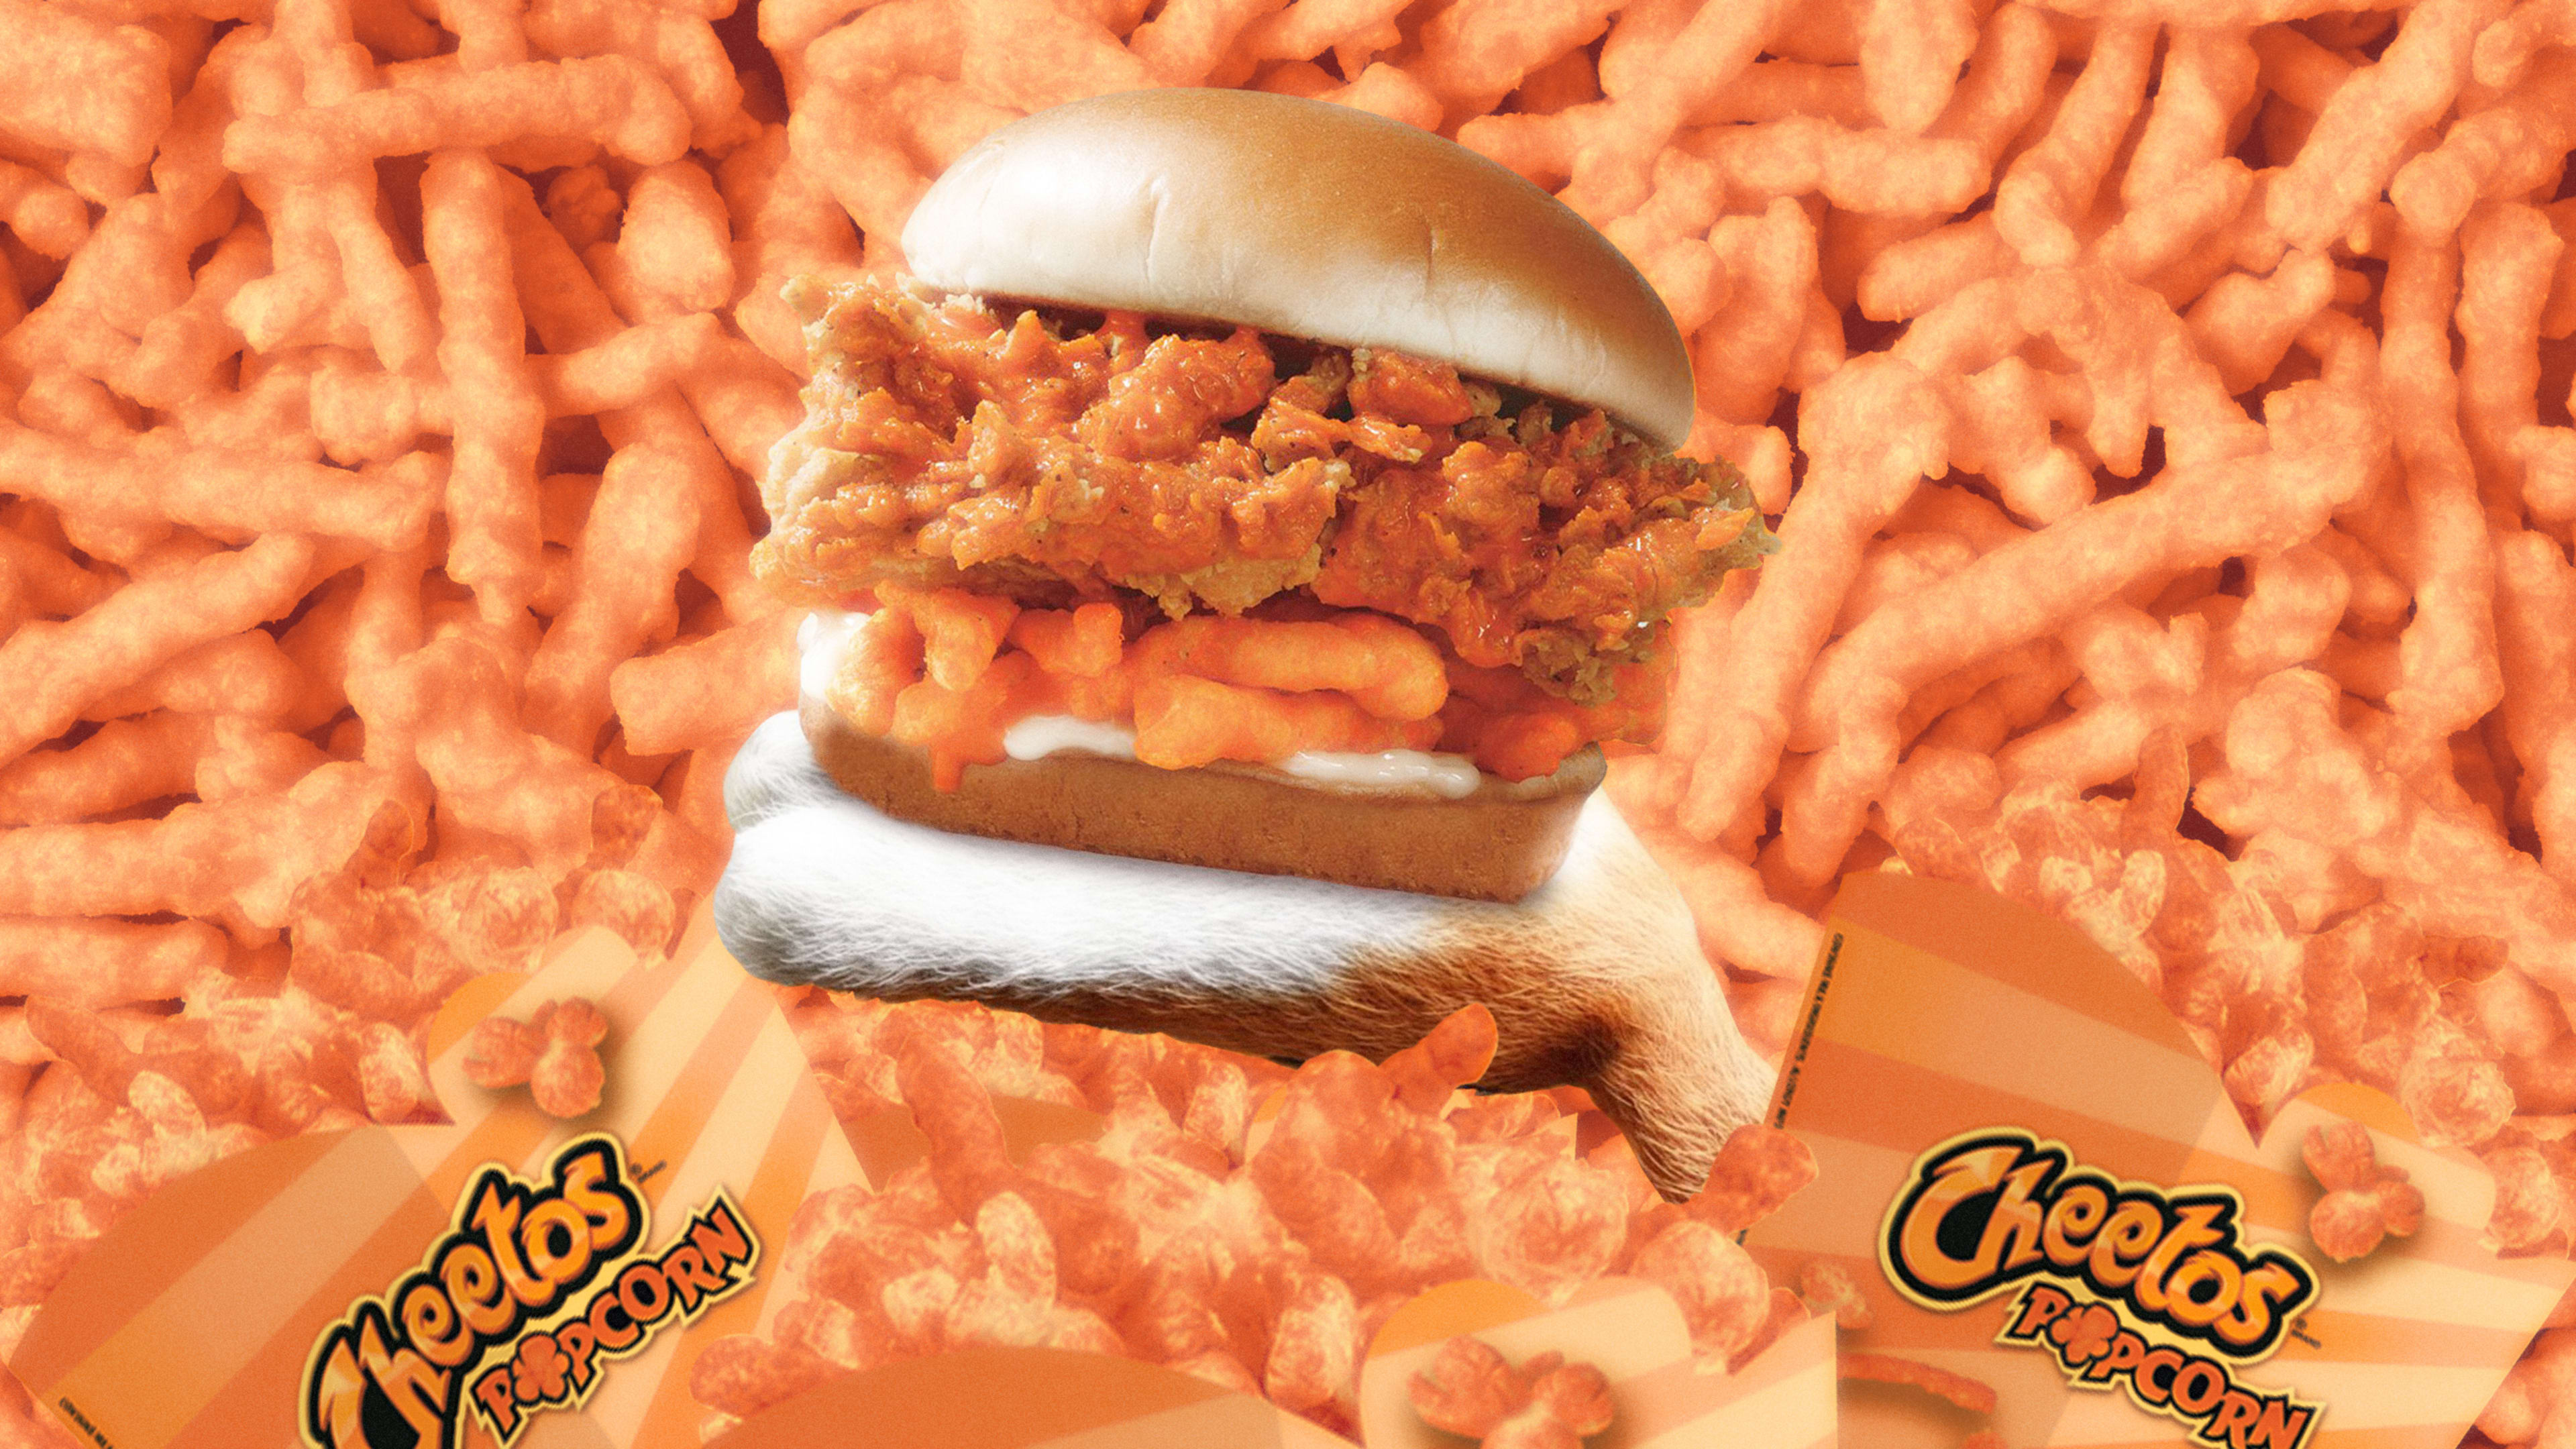 Meet the mastermind inventing fast food’s craziest menu items (Cheetos mozzarella stick, anyone?)